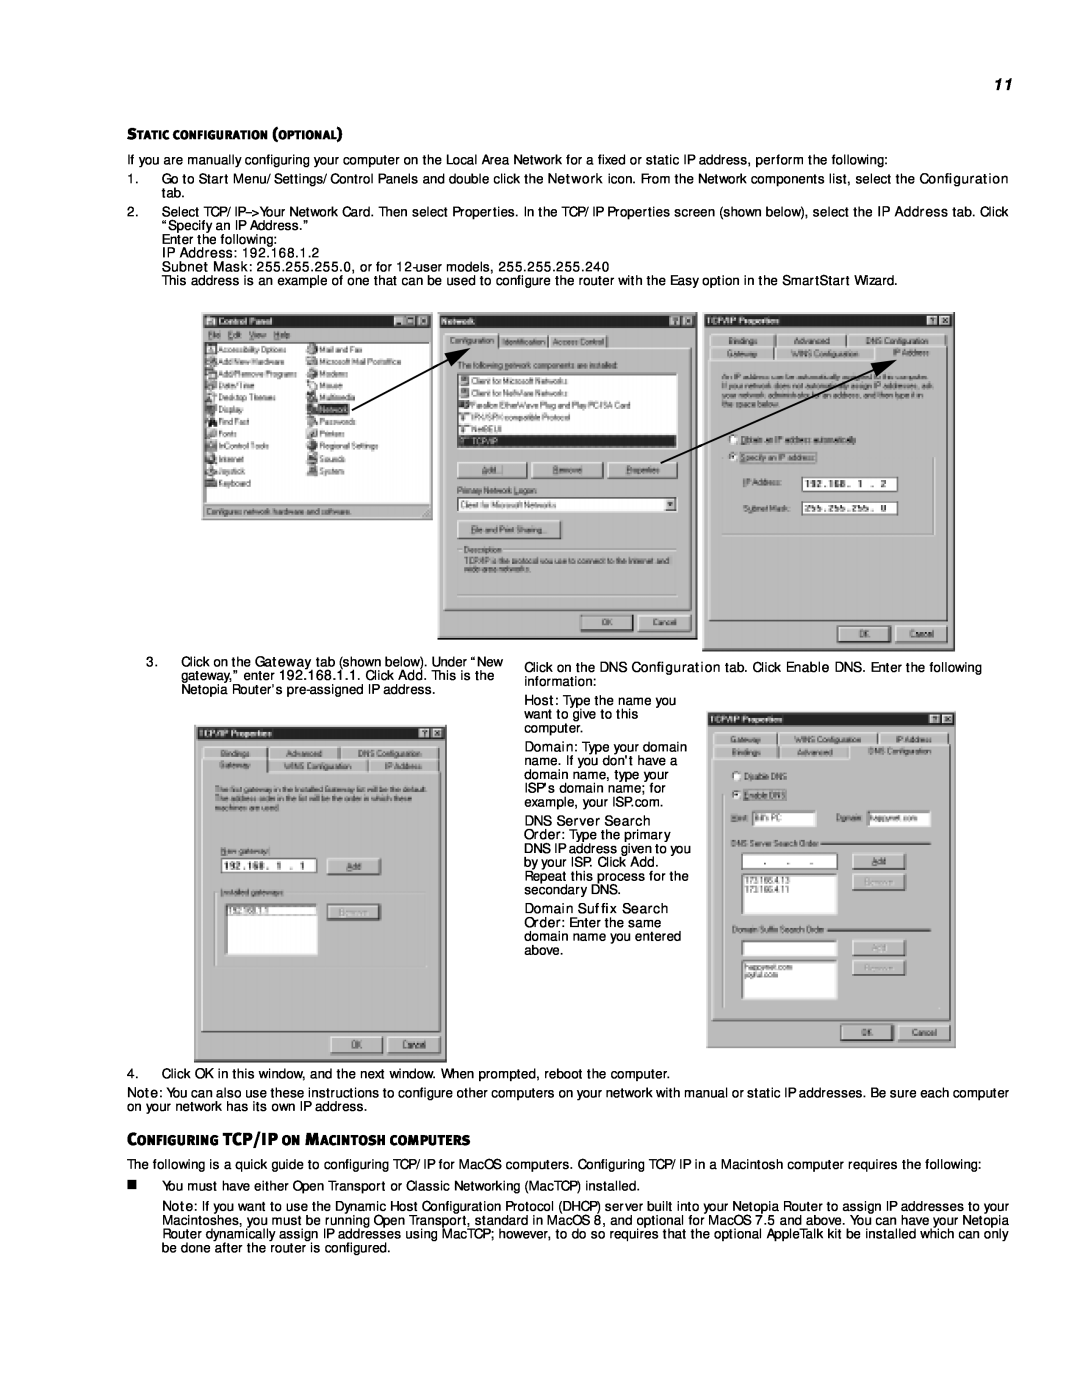 Netopia R-Series manual Configuring Tcp/Ip On Macintosh Computers, Static Configuration Optional 